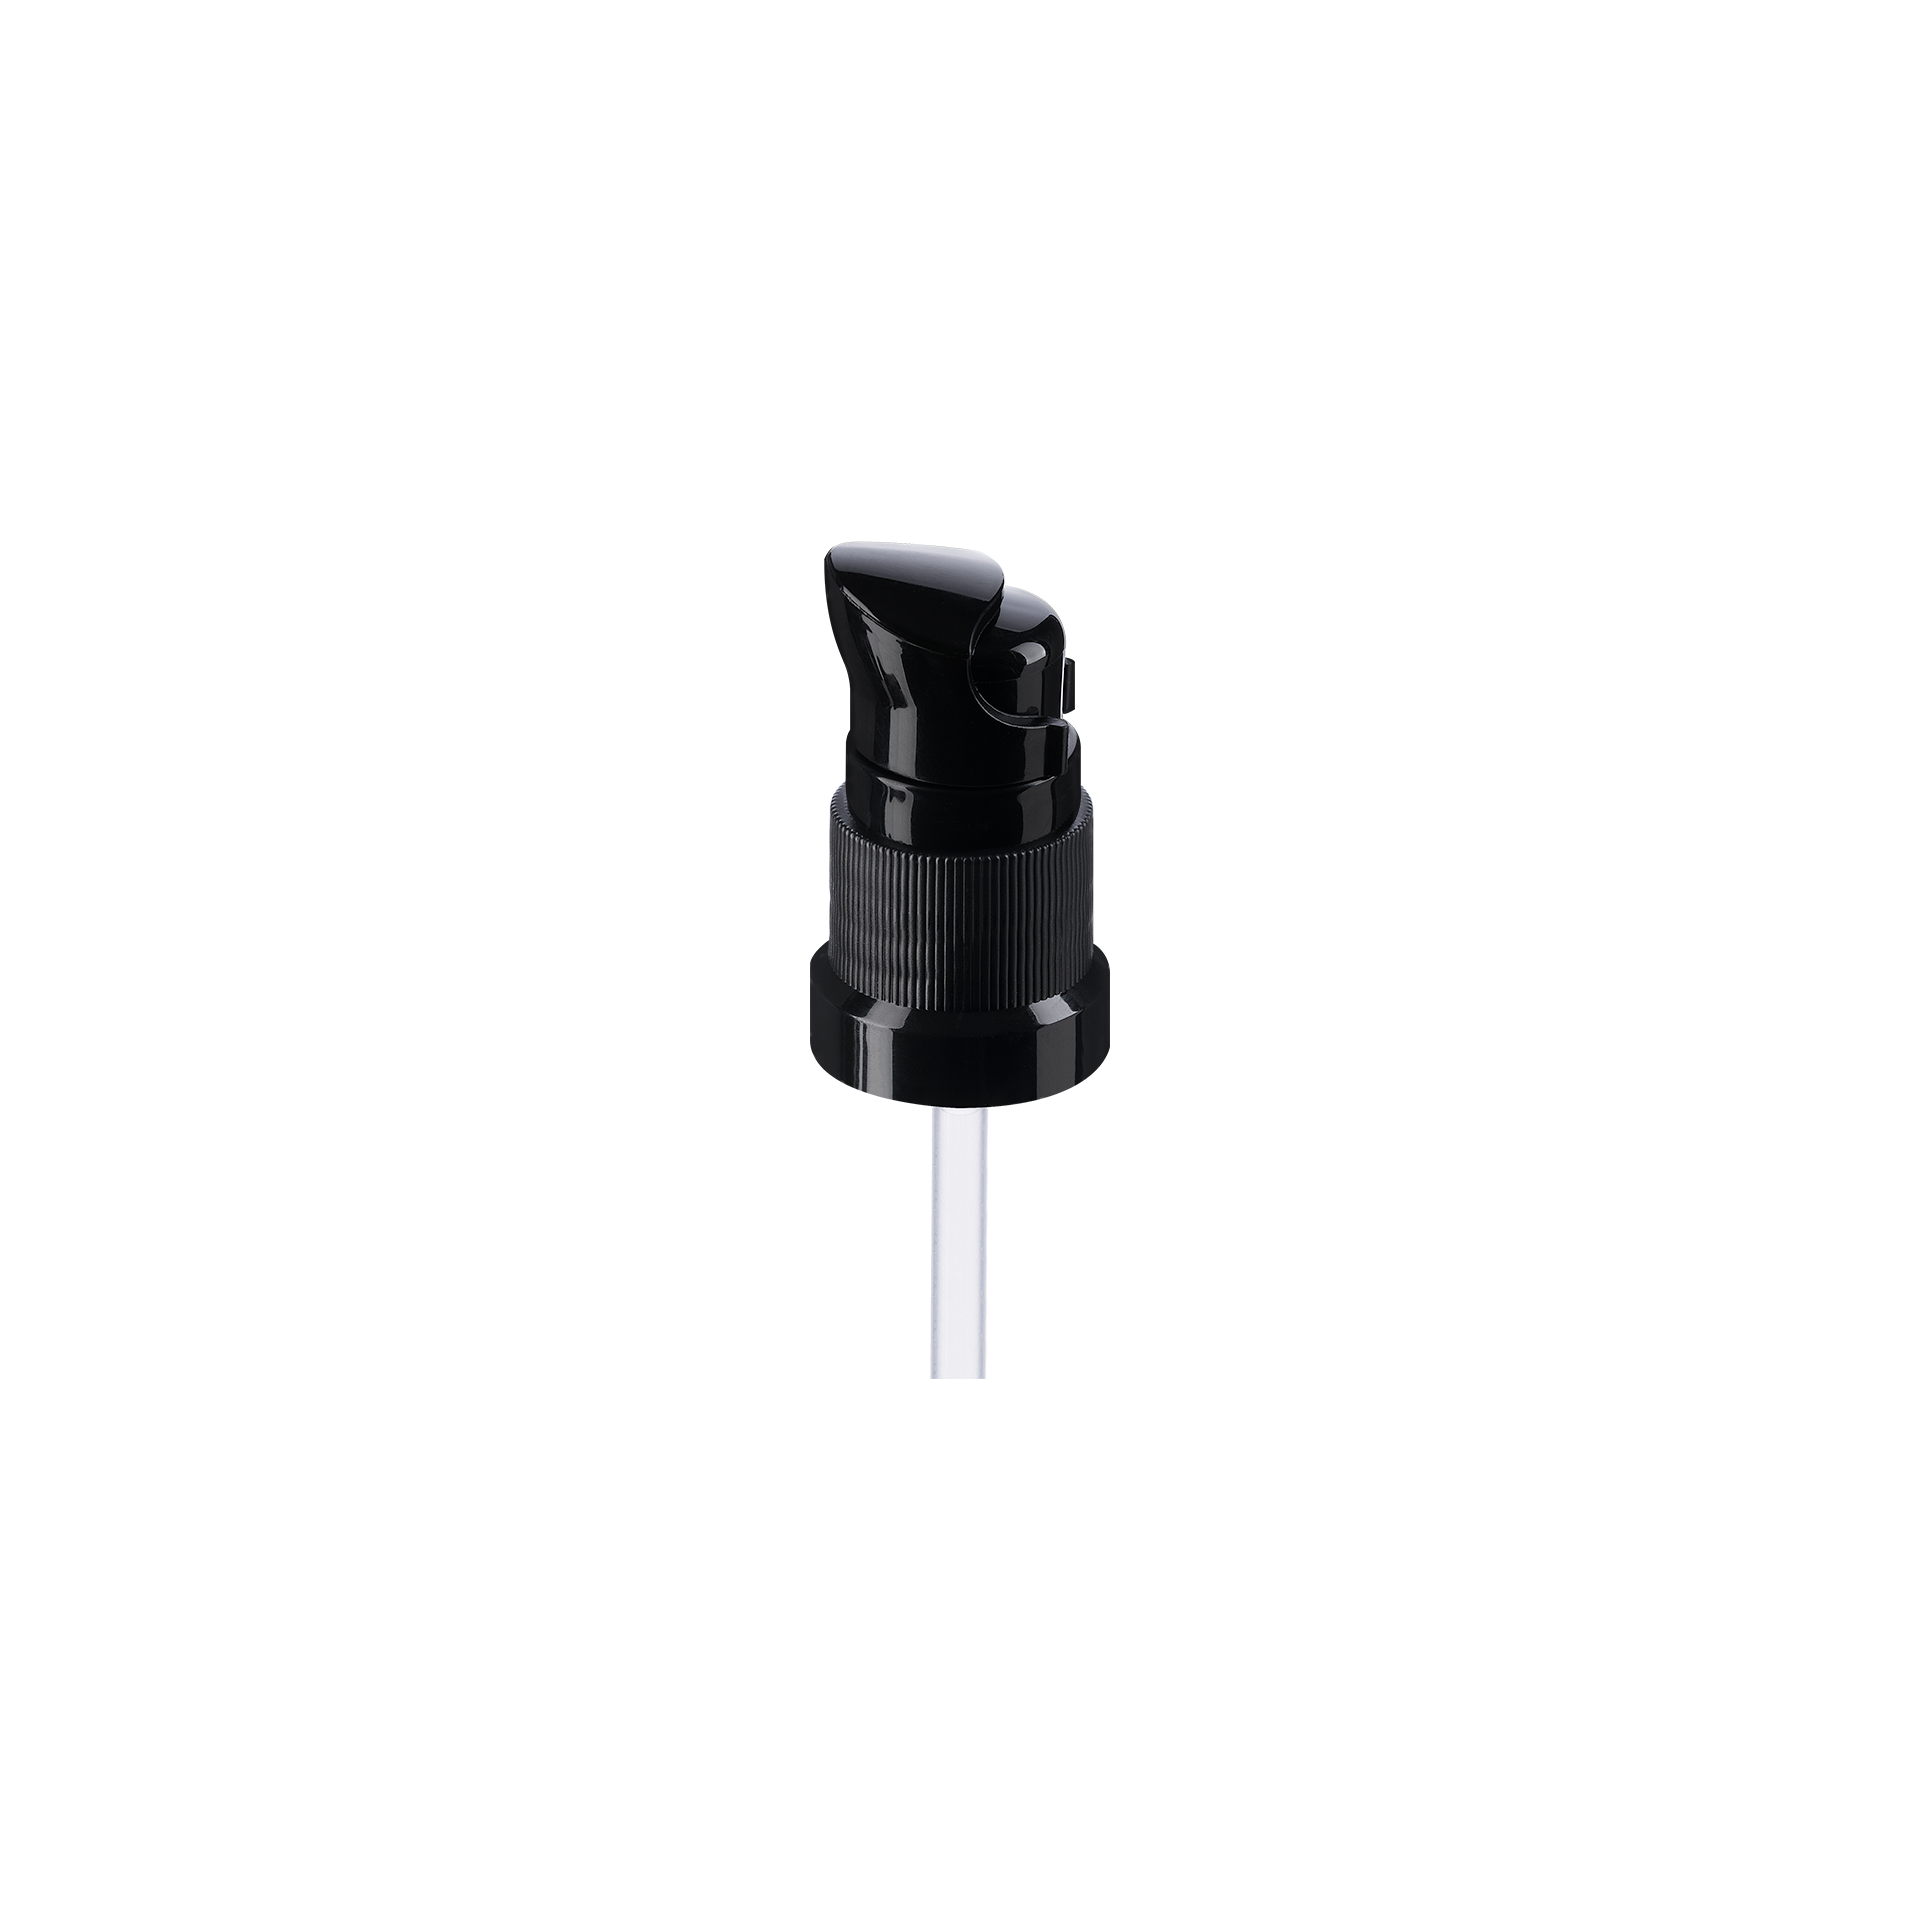 Lotion pump Metropolitan DIN18, PP, black, dose 0.15ml, black security clip (Jasmine 15)